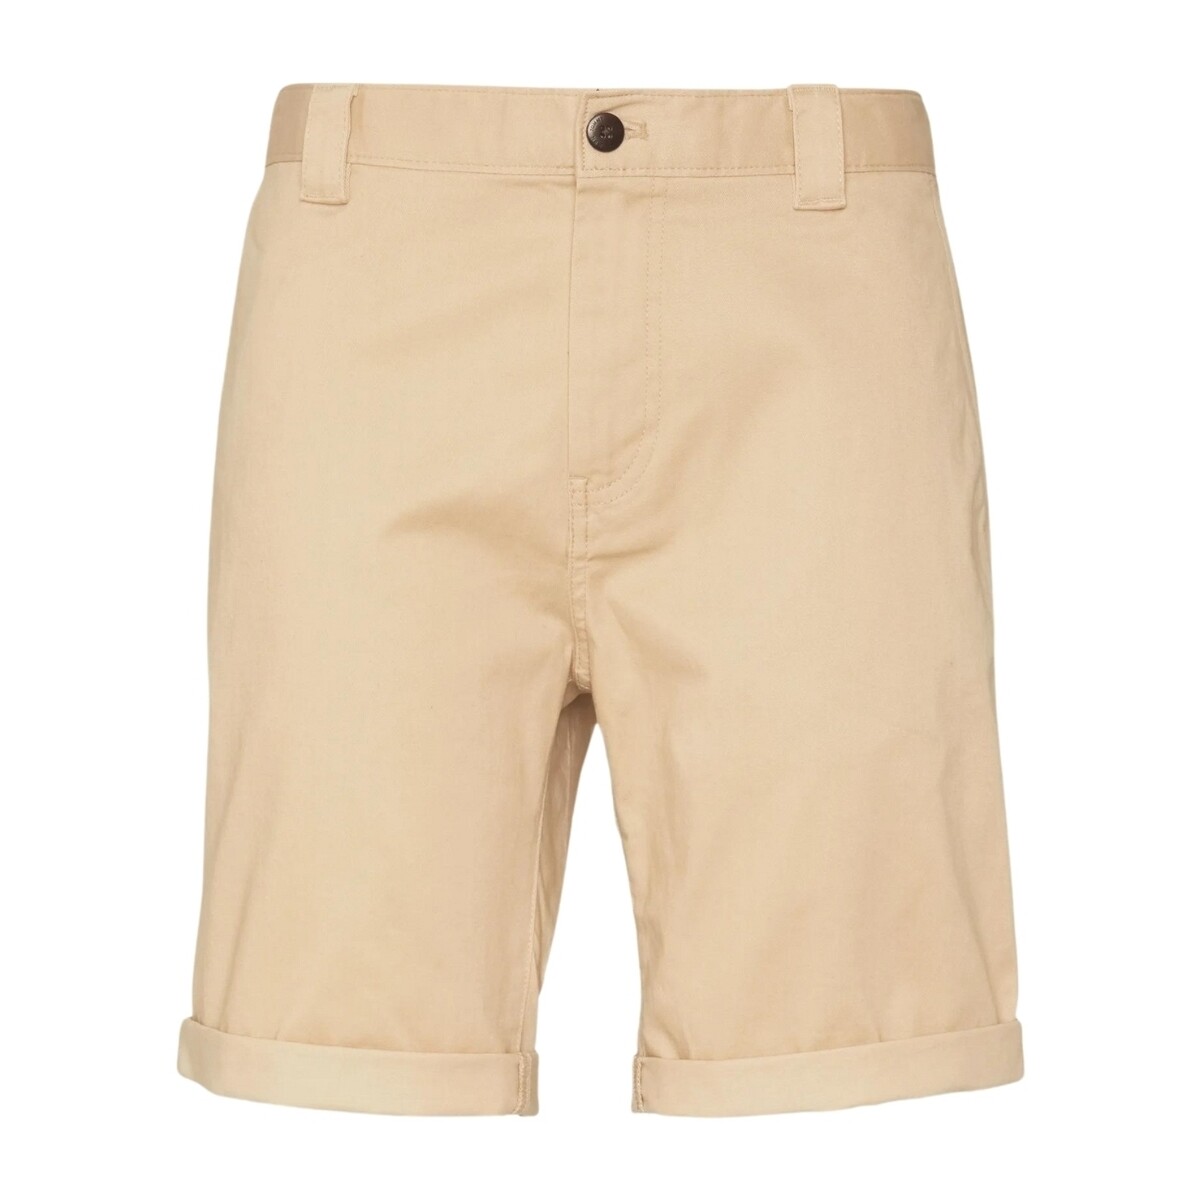 Vêtements Homme Shorts / Bermudas Tommy Jeans Short Chino  ref 59567 AB4 Multi Beige